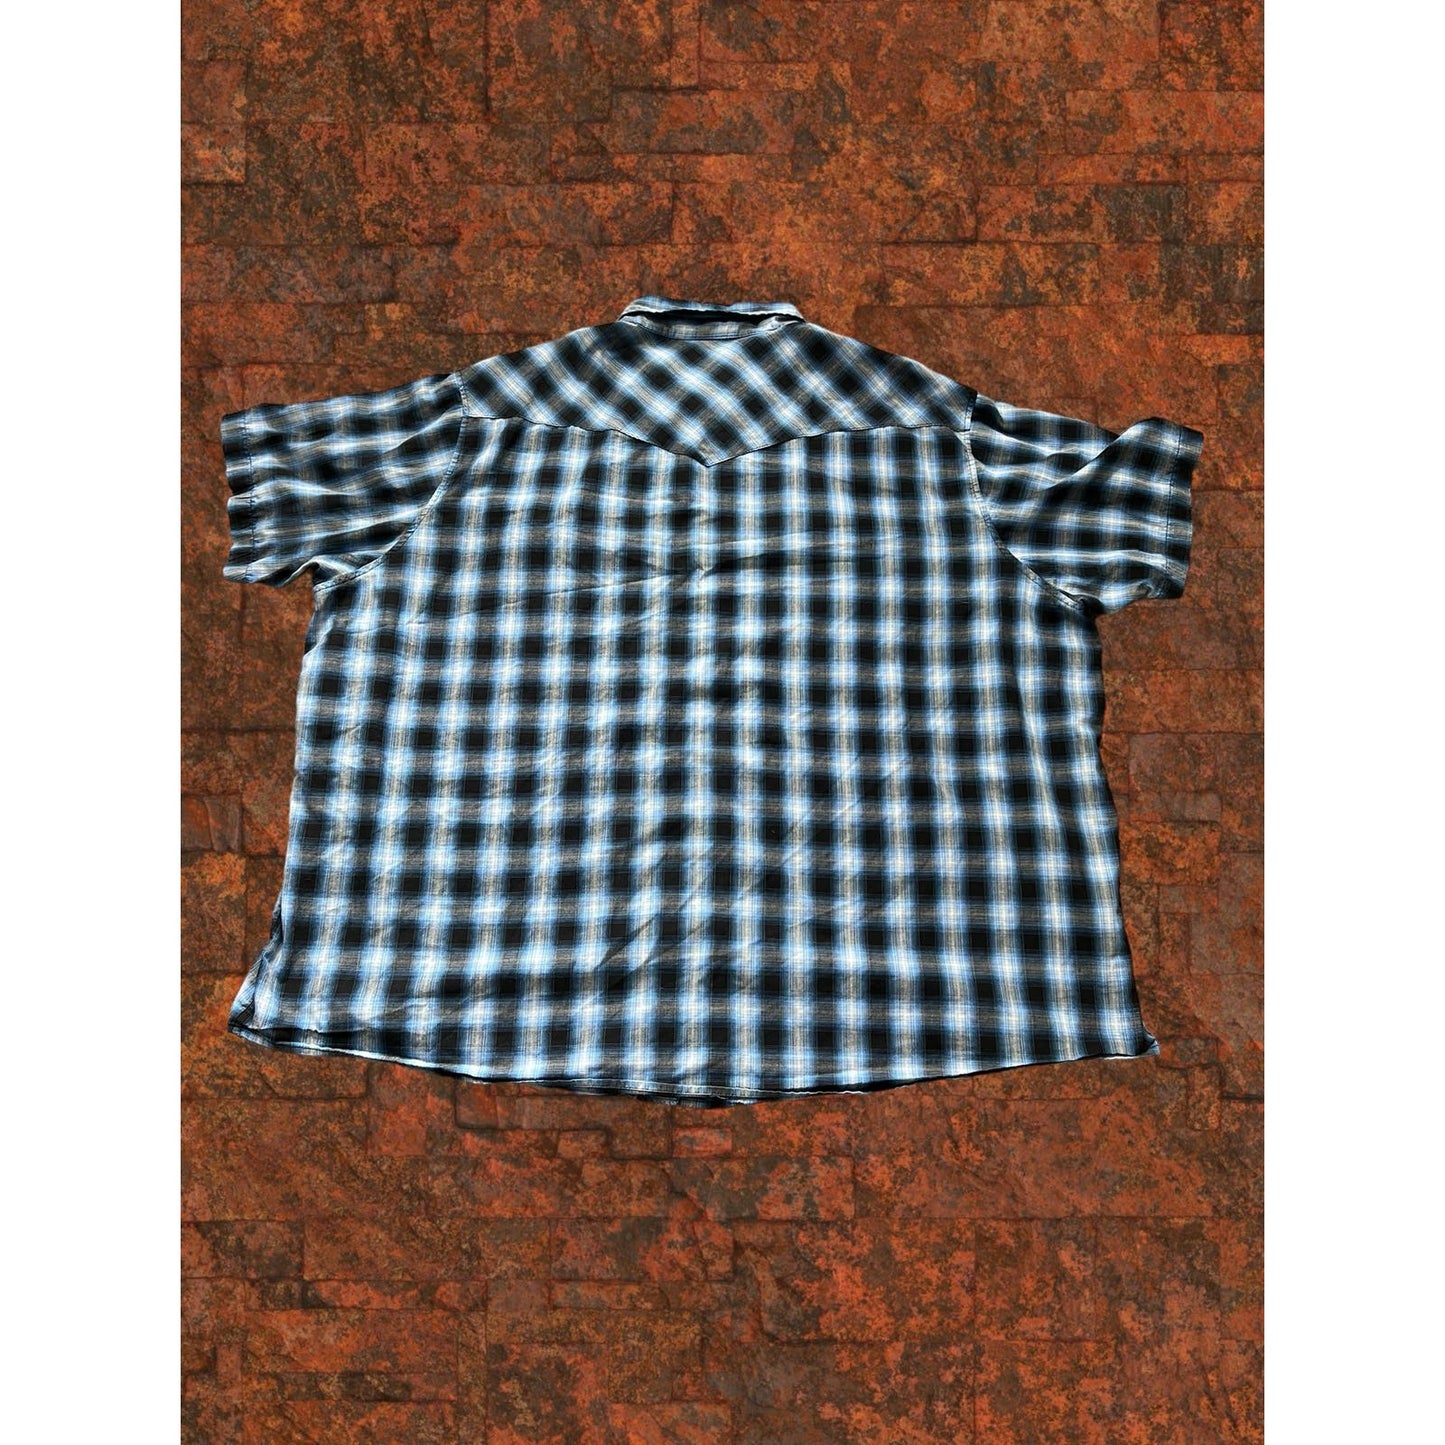 Wrangler Pearl Snap Casual Button Up Shirt